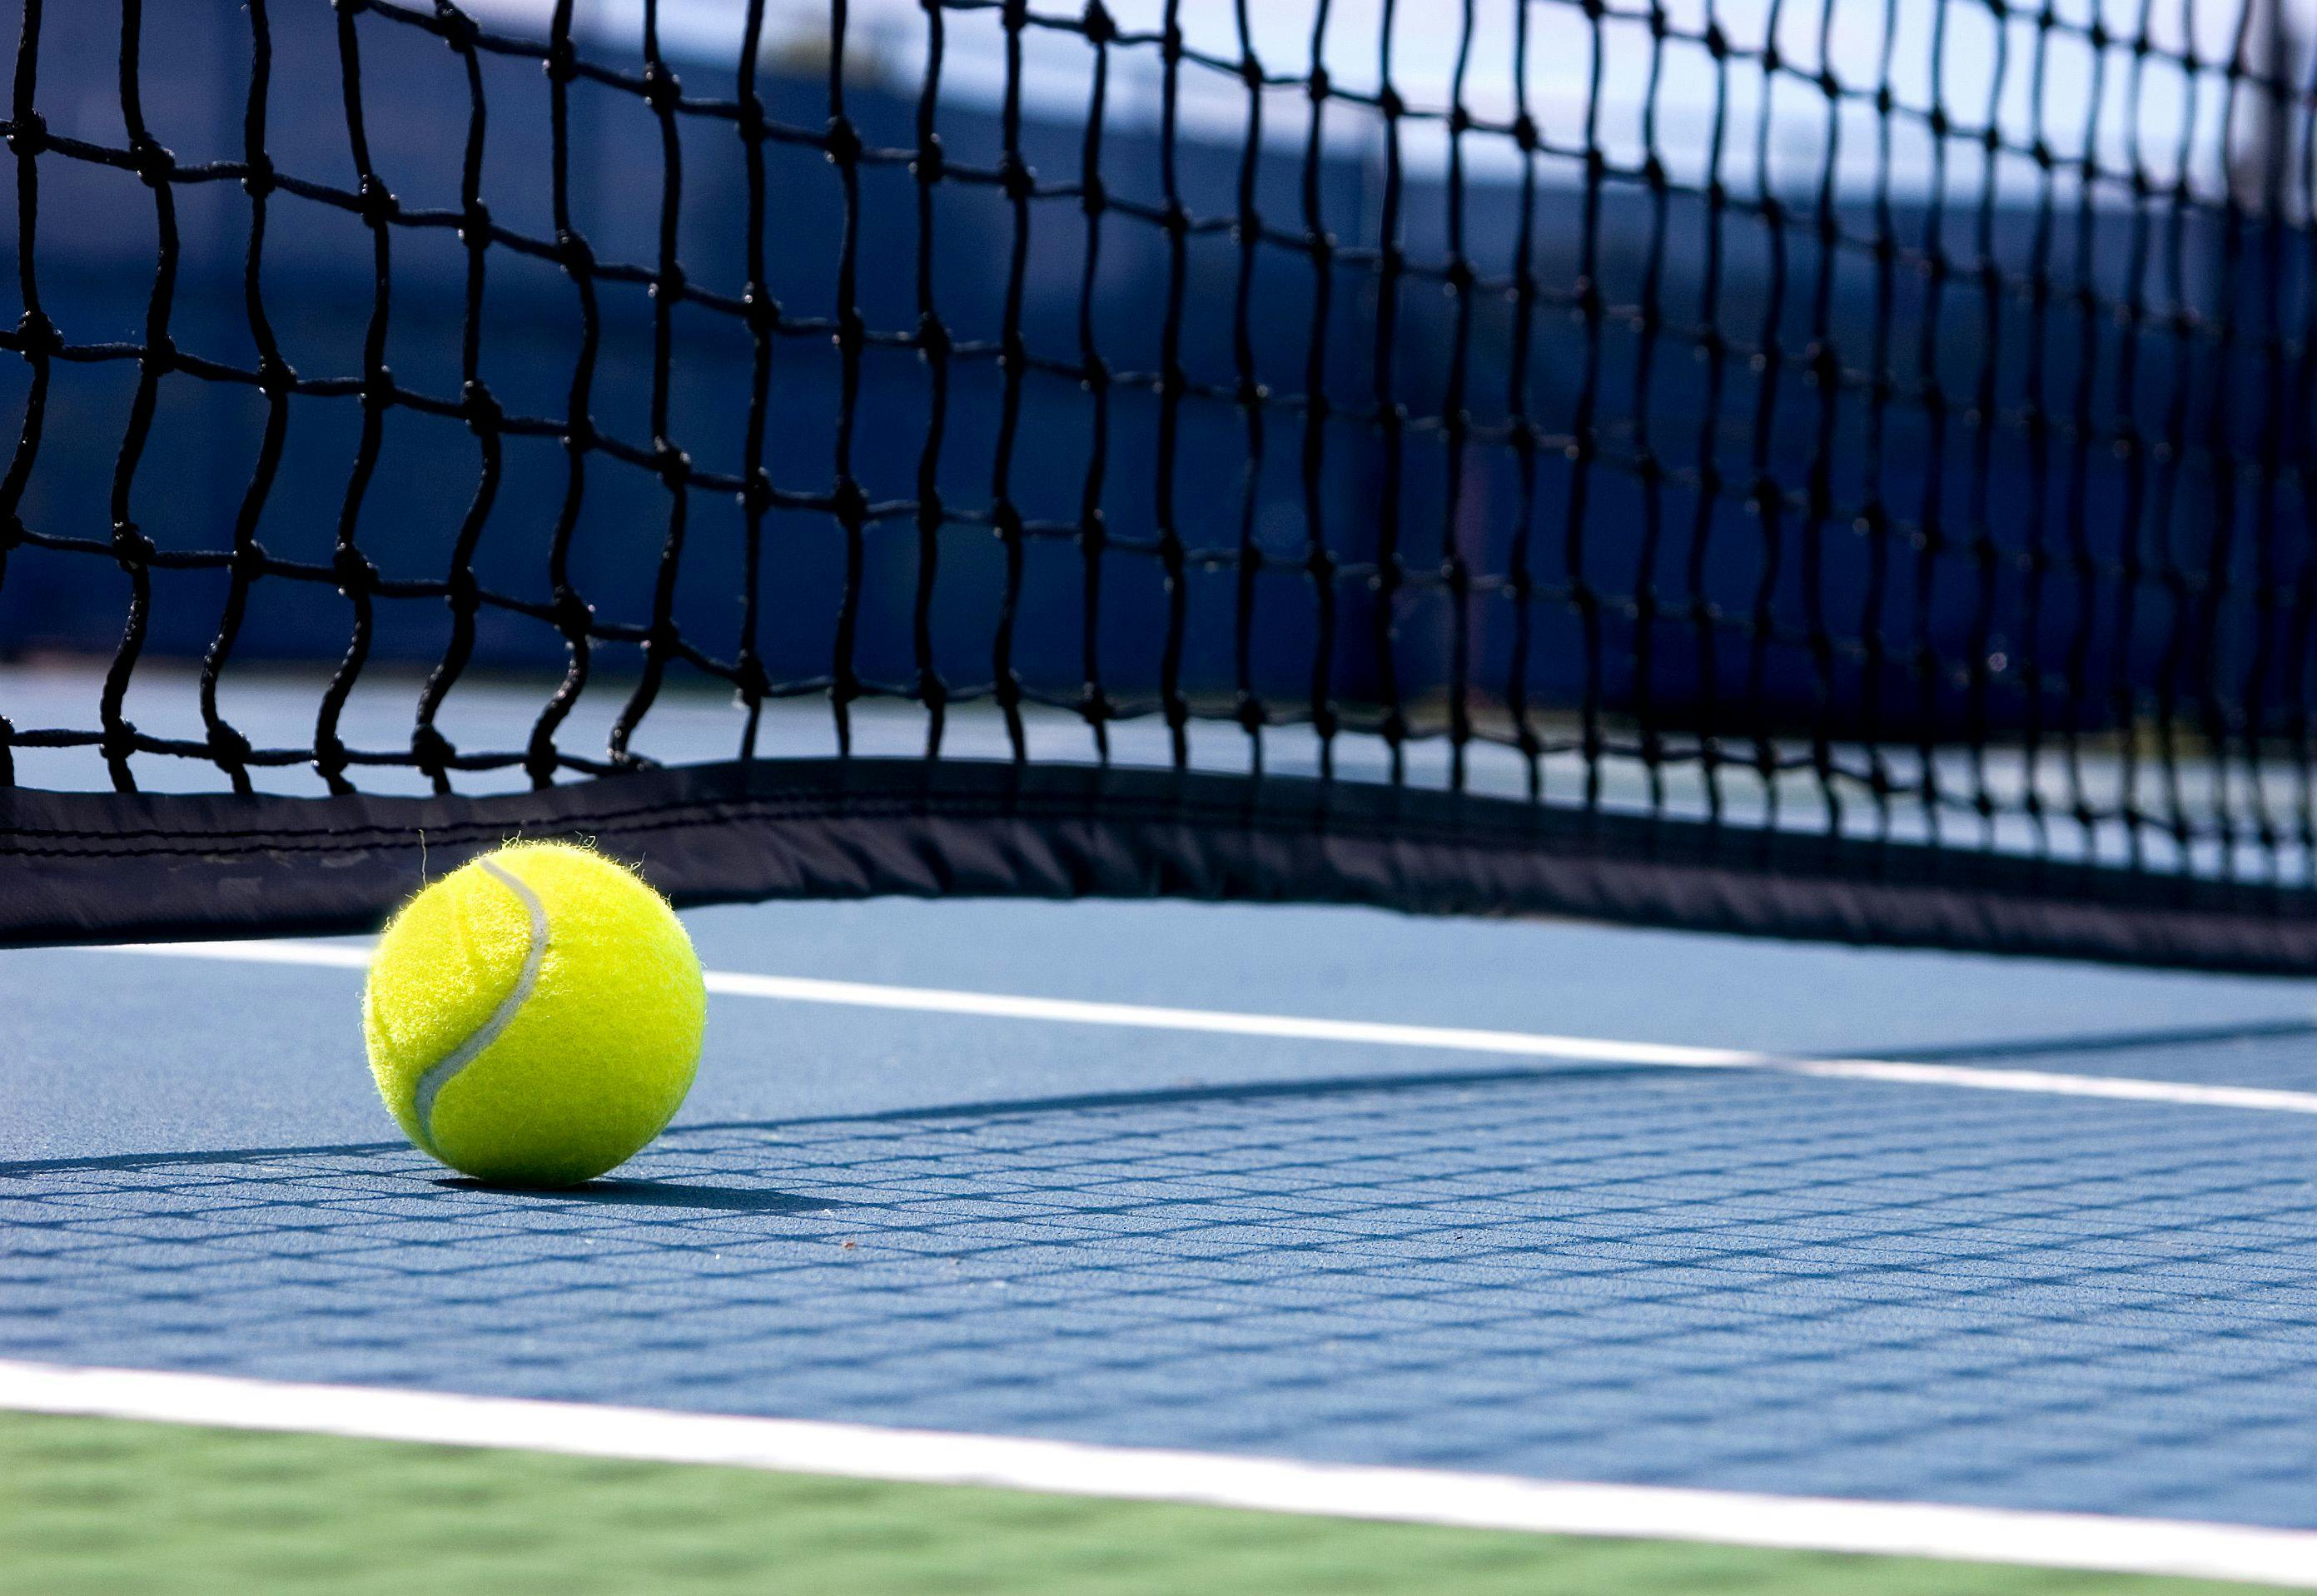 Tennis ball on the court | Image credit © Karen Arehart - stock.adobe.com